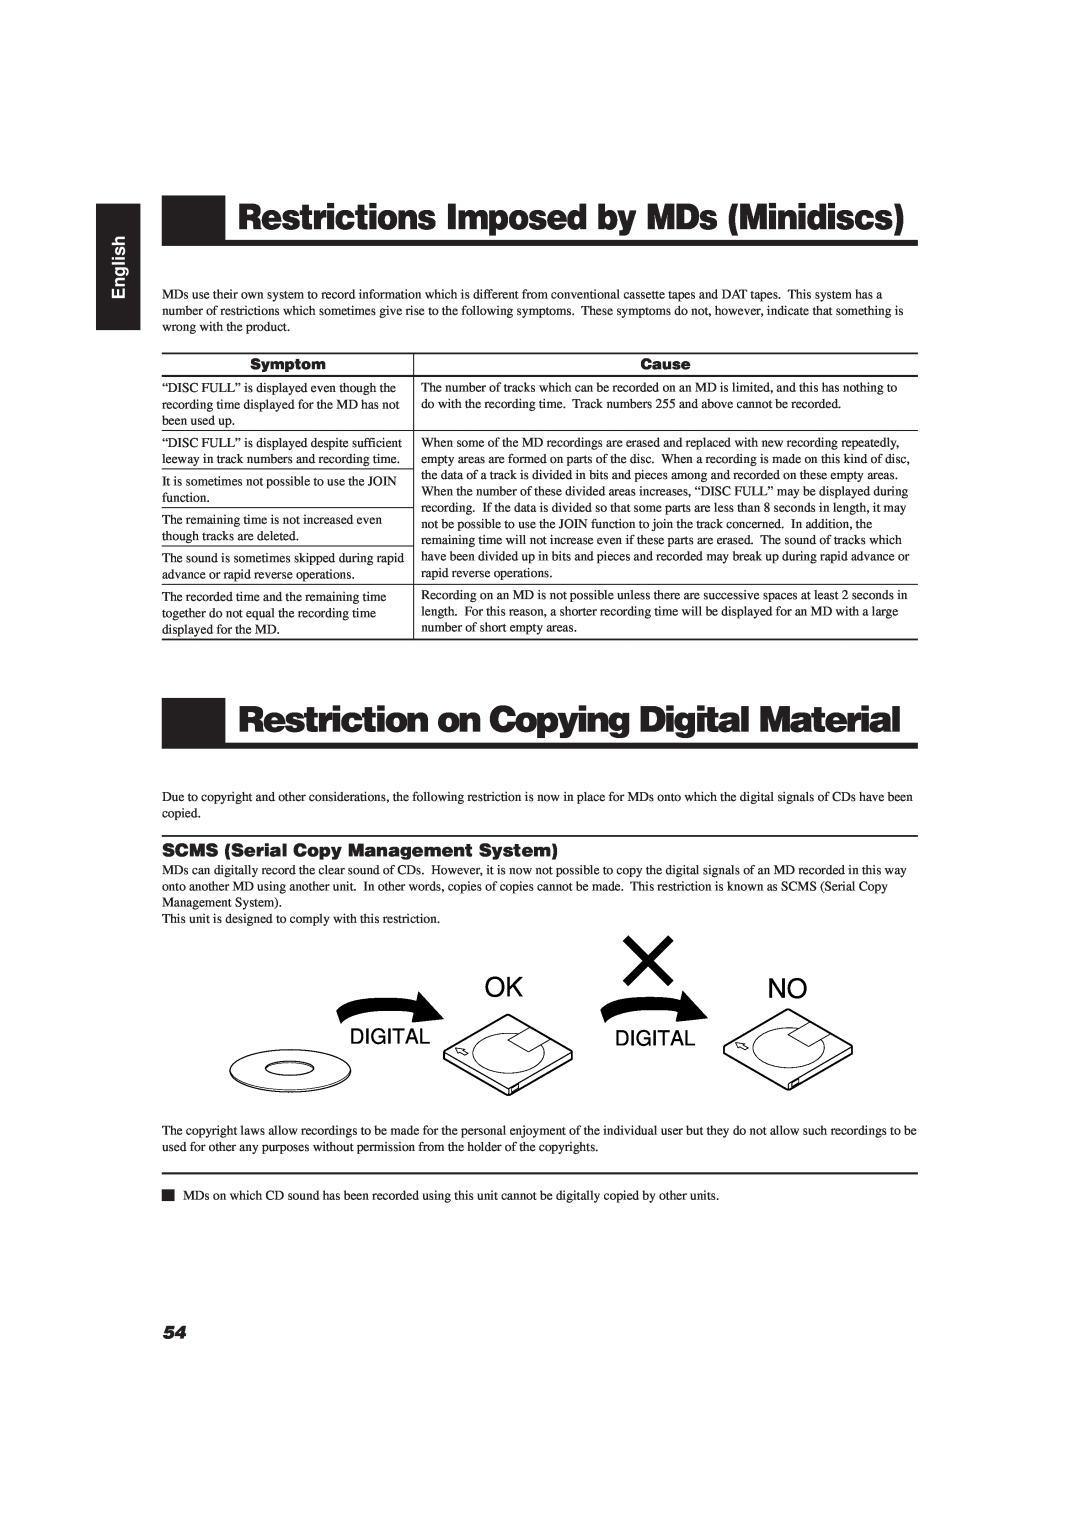 JVC XU-301 Restrictions Imposed by MDs Minidiscs, Restriction on Copying Digital Material, Okno, Digitaldigital, English 